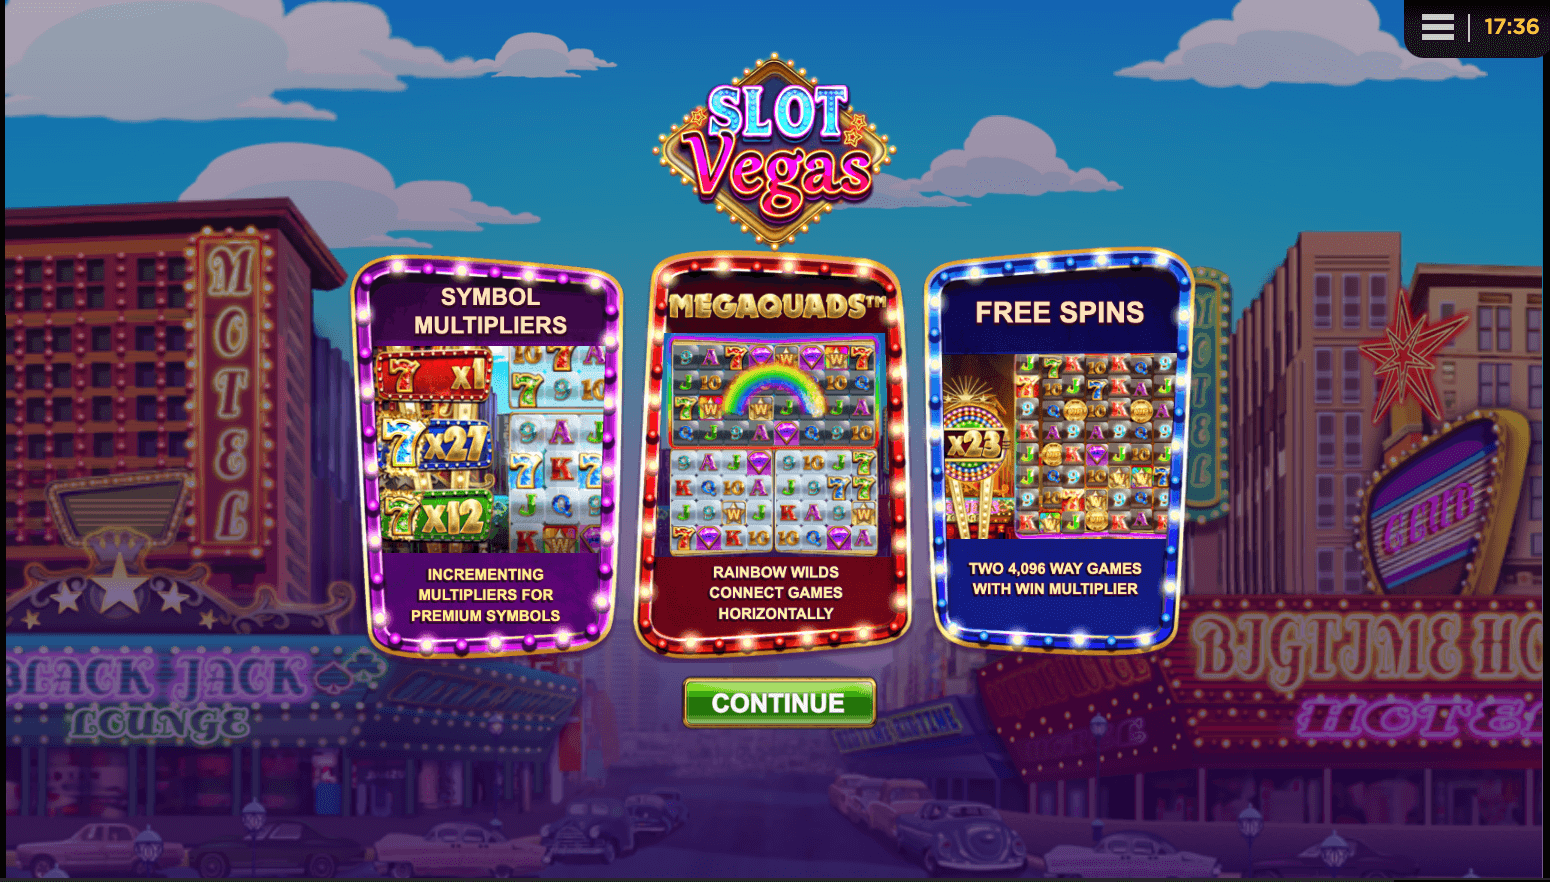 Slot Vegas Megaquads proceso de juego